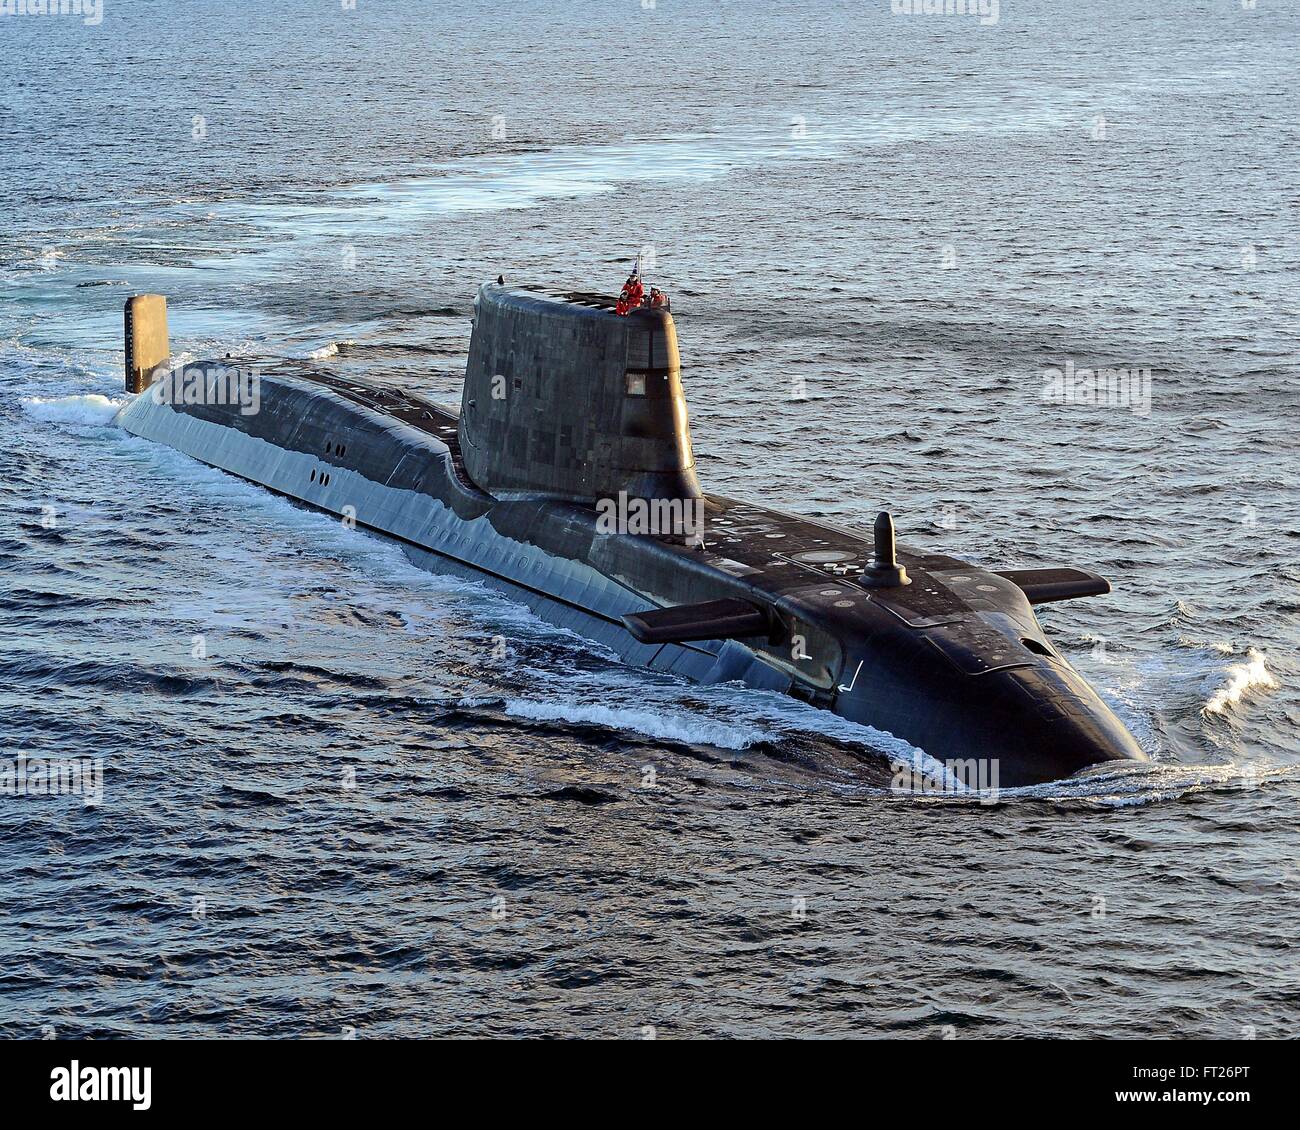 The Royal Navy Astute class submarine HMS Ambush during sea trials December 5, 2012 near Scotland. Stock Photo